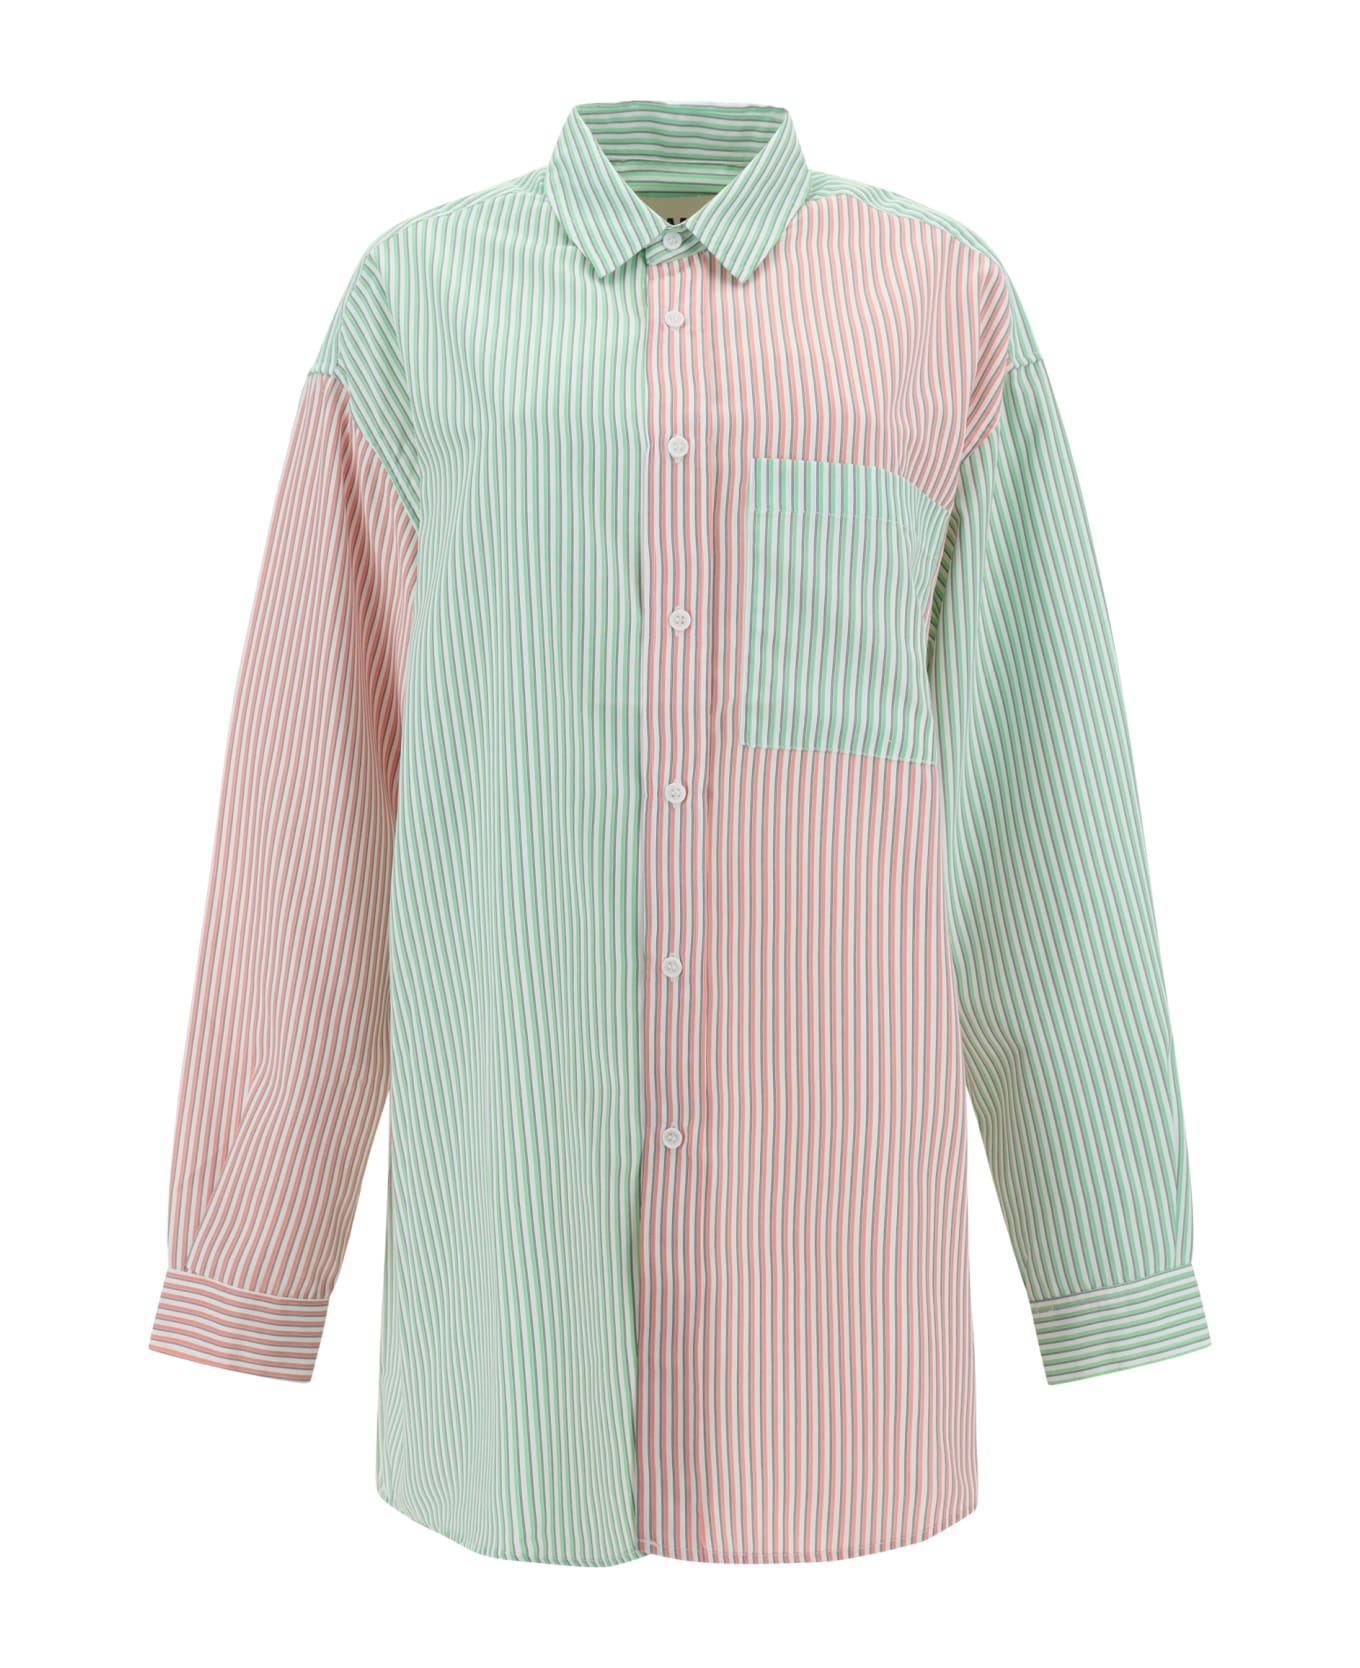 BLANCA Benny Shirt - Lime/pink